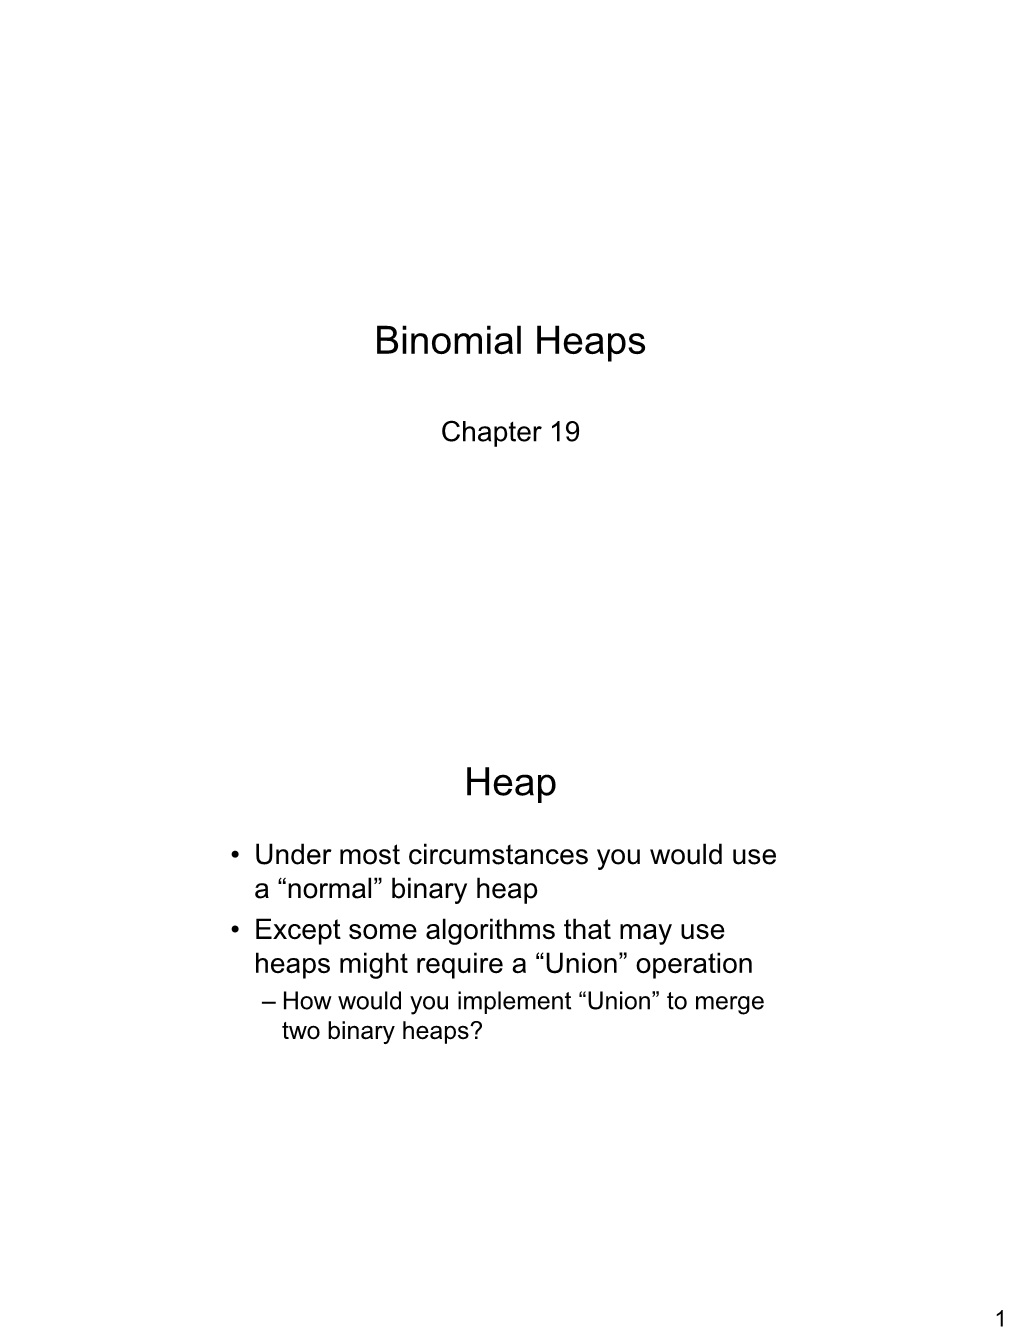 Binomial Heaps Heap